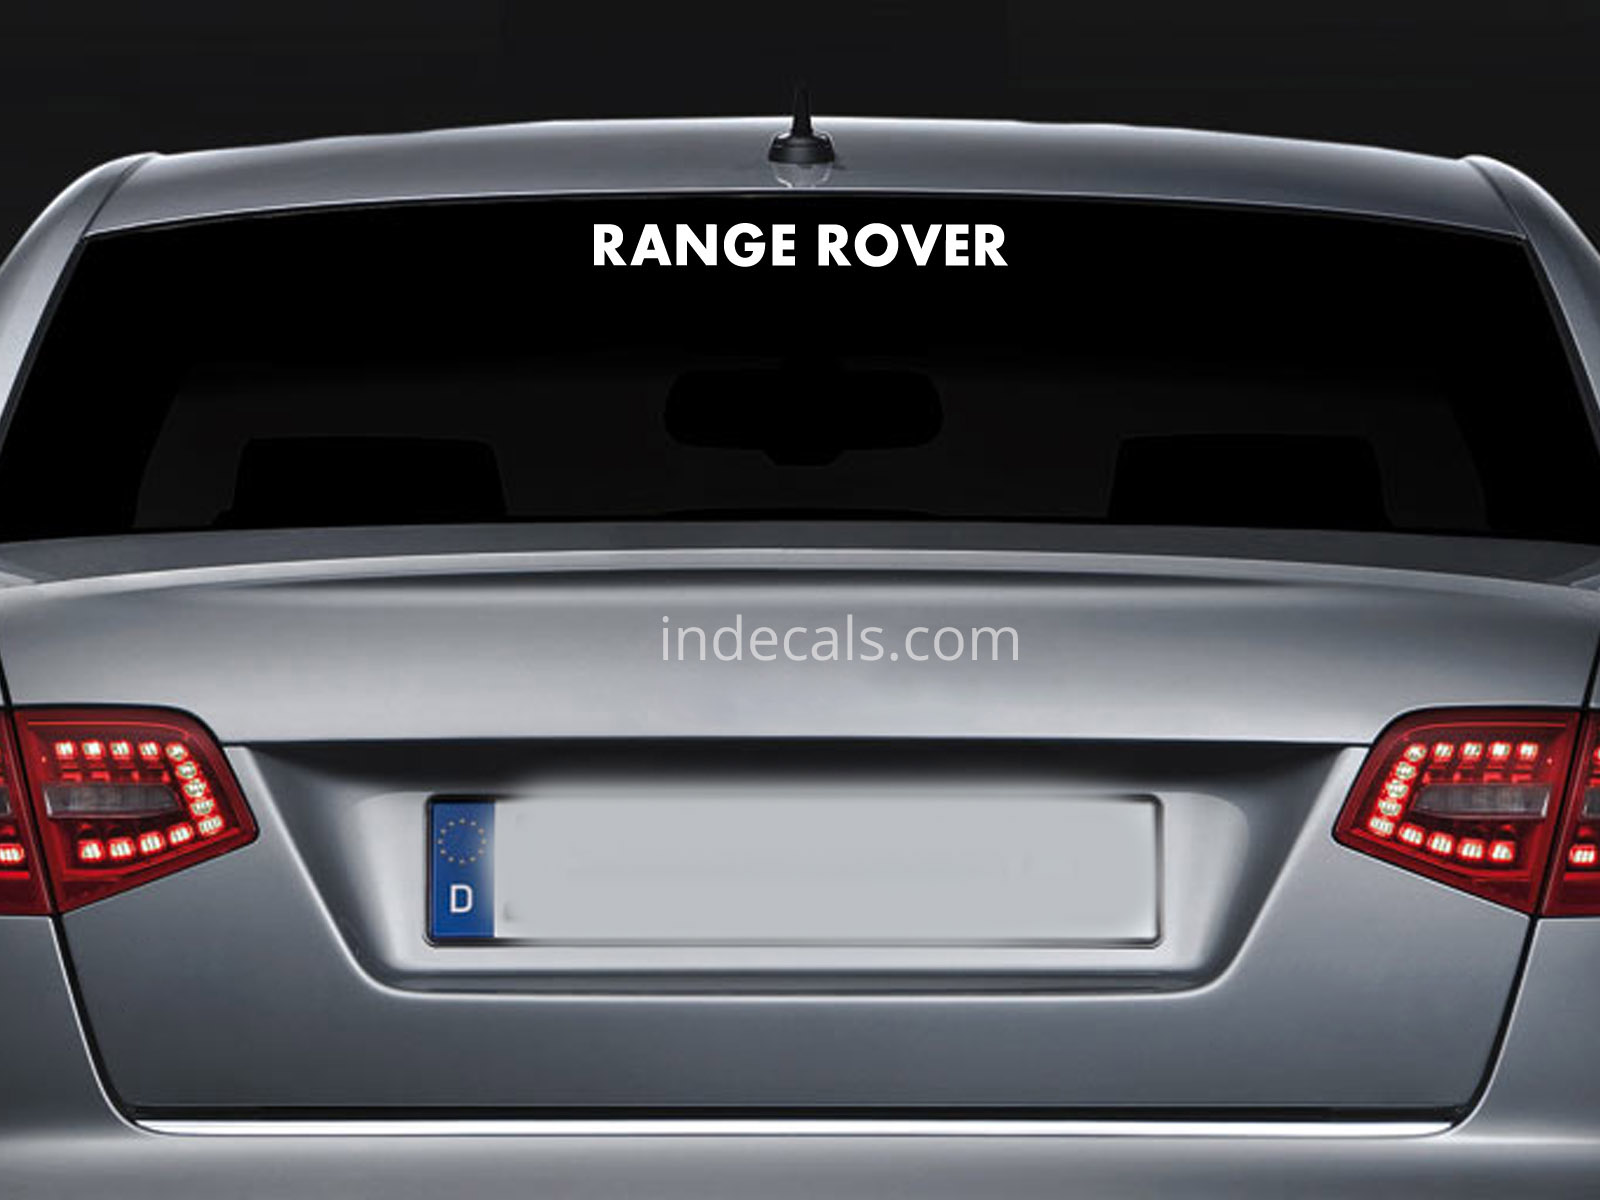 1 x Range Rover Sticker for Windshield or Back Window - White